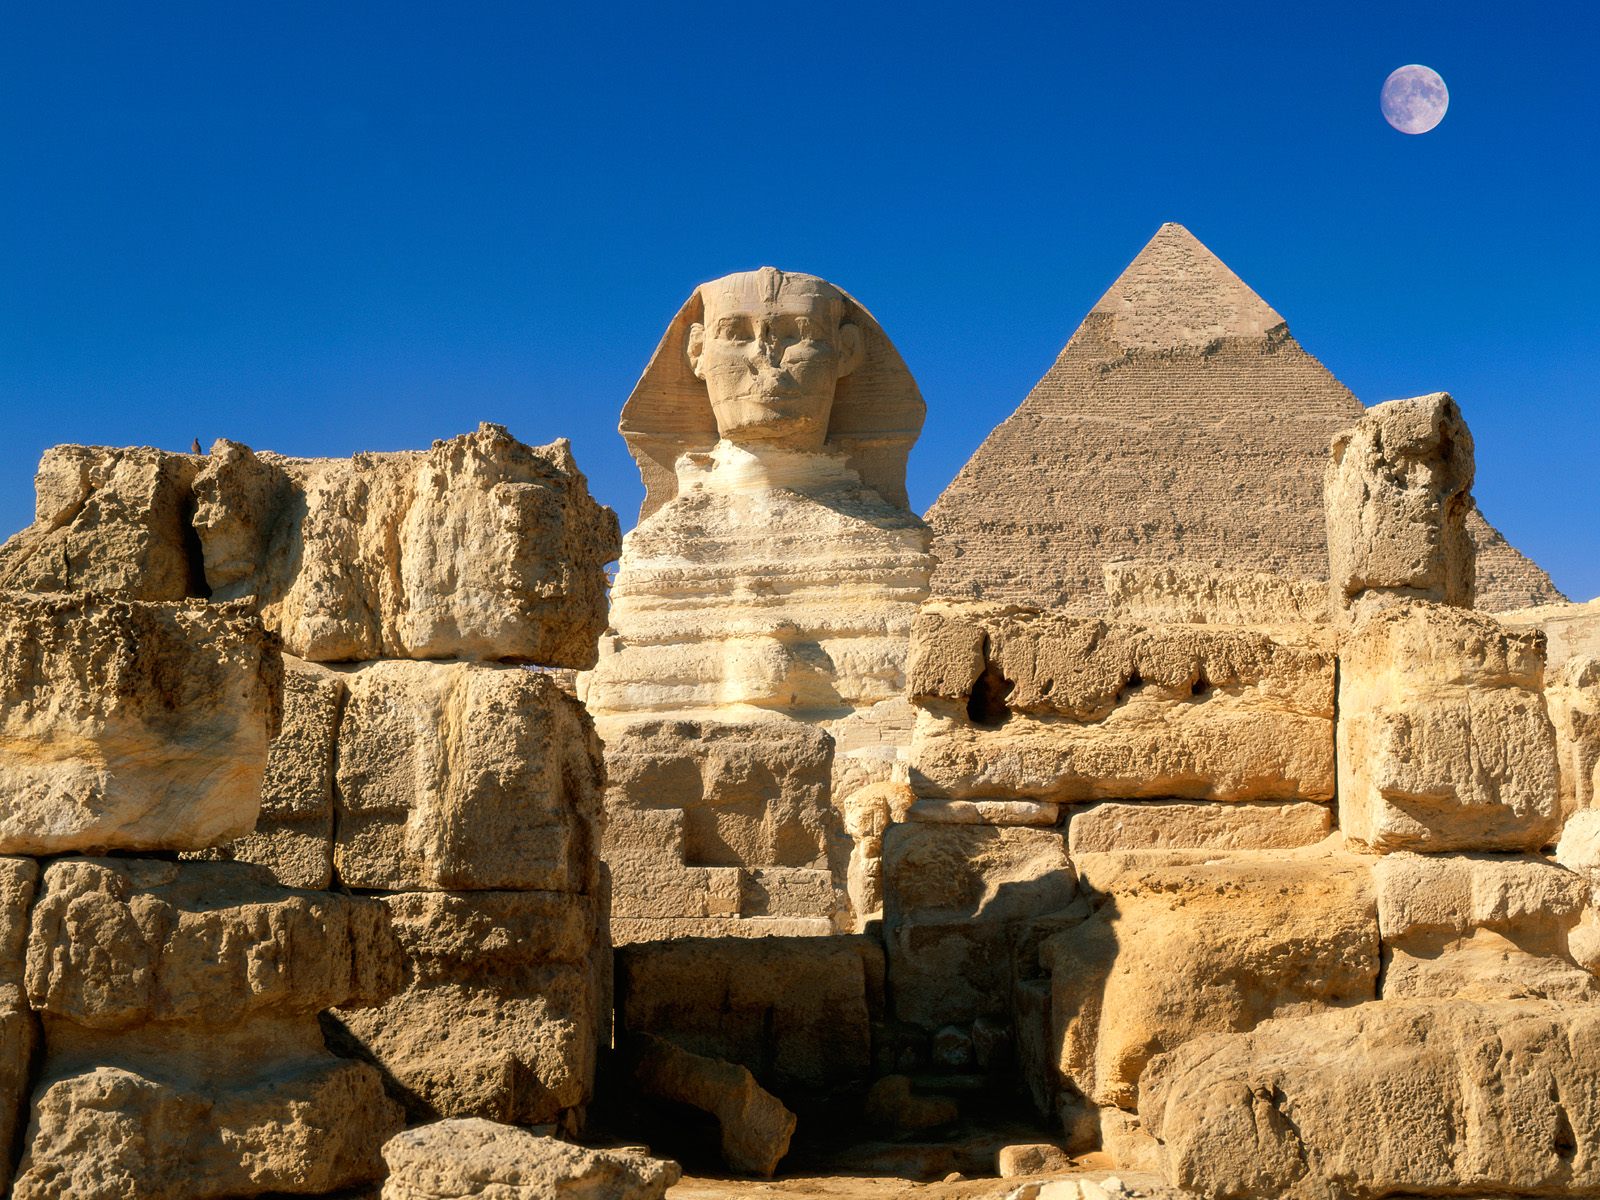 https://blogger.googleusercontent.com/img/b/R29vZ2xl/AVvXsEiXT2CVftfp63x7oJBz1XxAHuQ6ZTEz-4H9vh1_ofTlFv1onEVjpEpkDuT20Evz7VKdJxCPjlogO27i2xh7NVhvPDyFQMiXwVluVuYEgNlO1lZwvMLf8XDQxLiy2qI4yuQBTSz4cdoKFhI/s1600/Great+Sphinx%252C+Chephren+Pyramid%252C+Giza%252C+Egypt.jpg